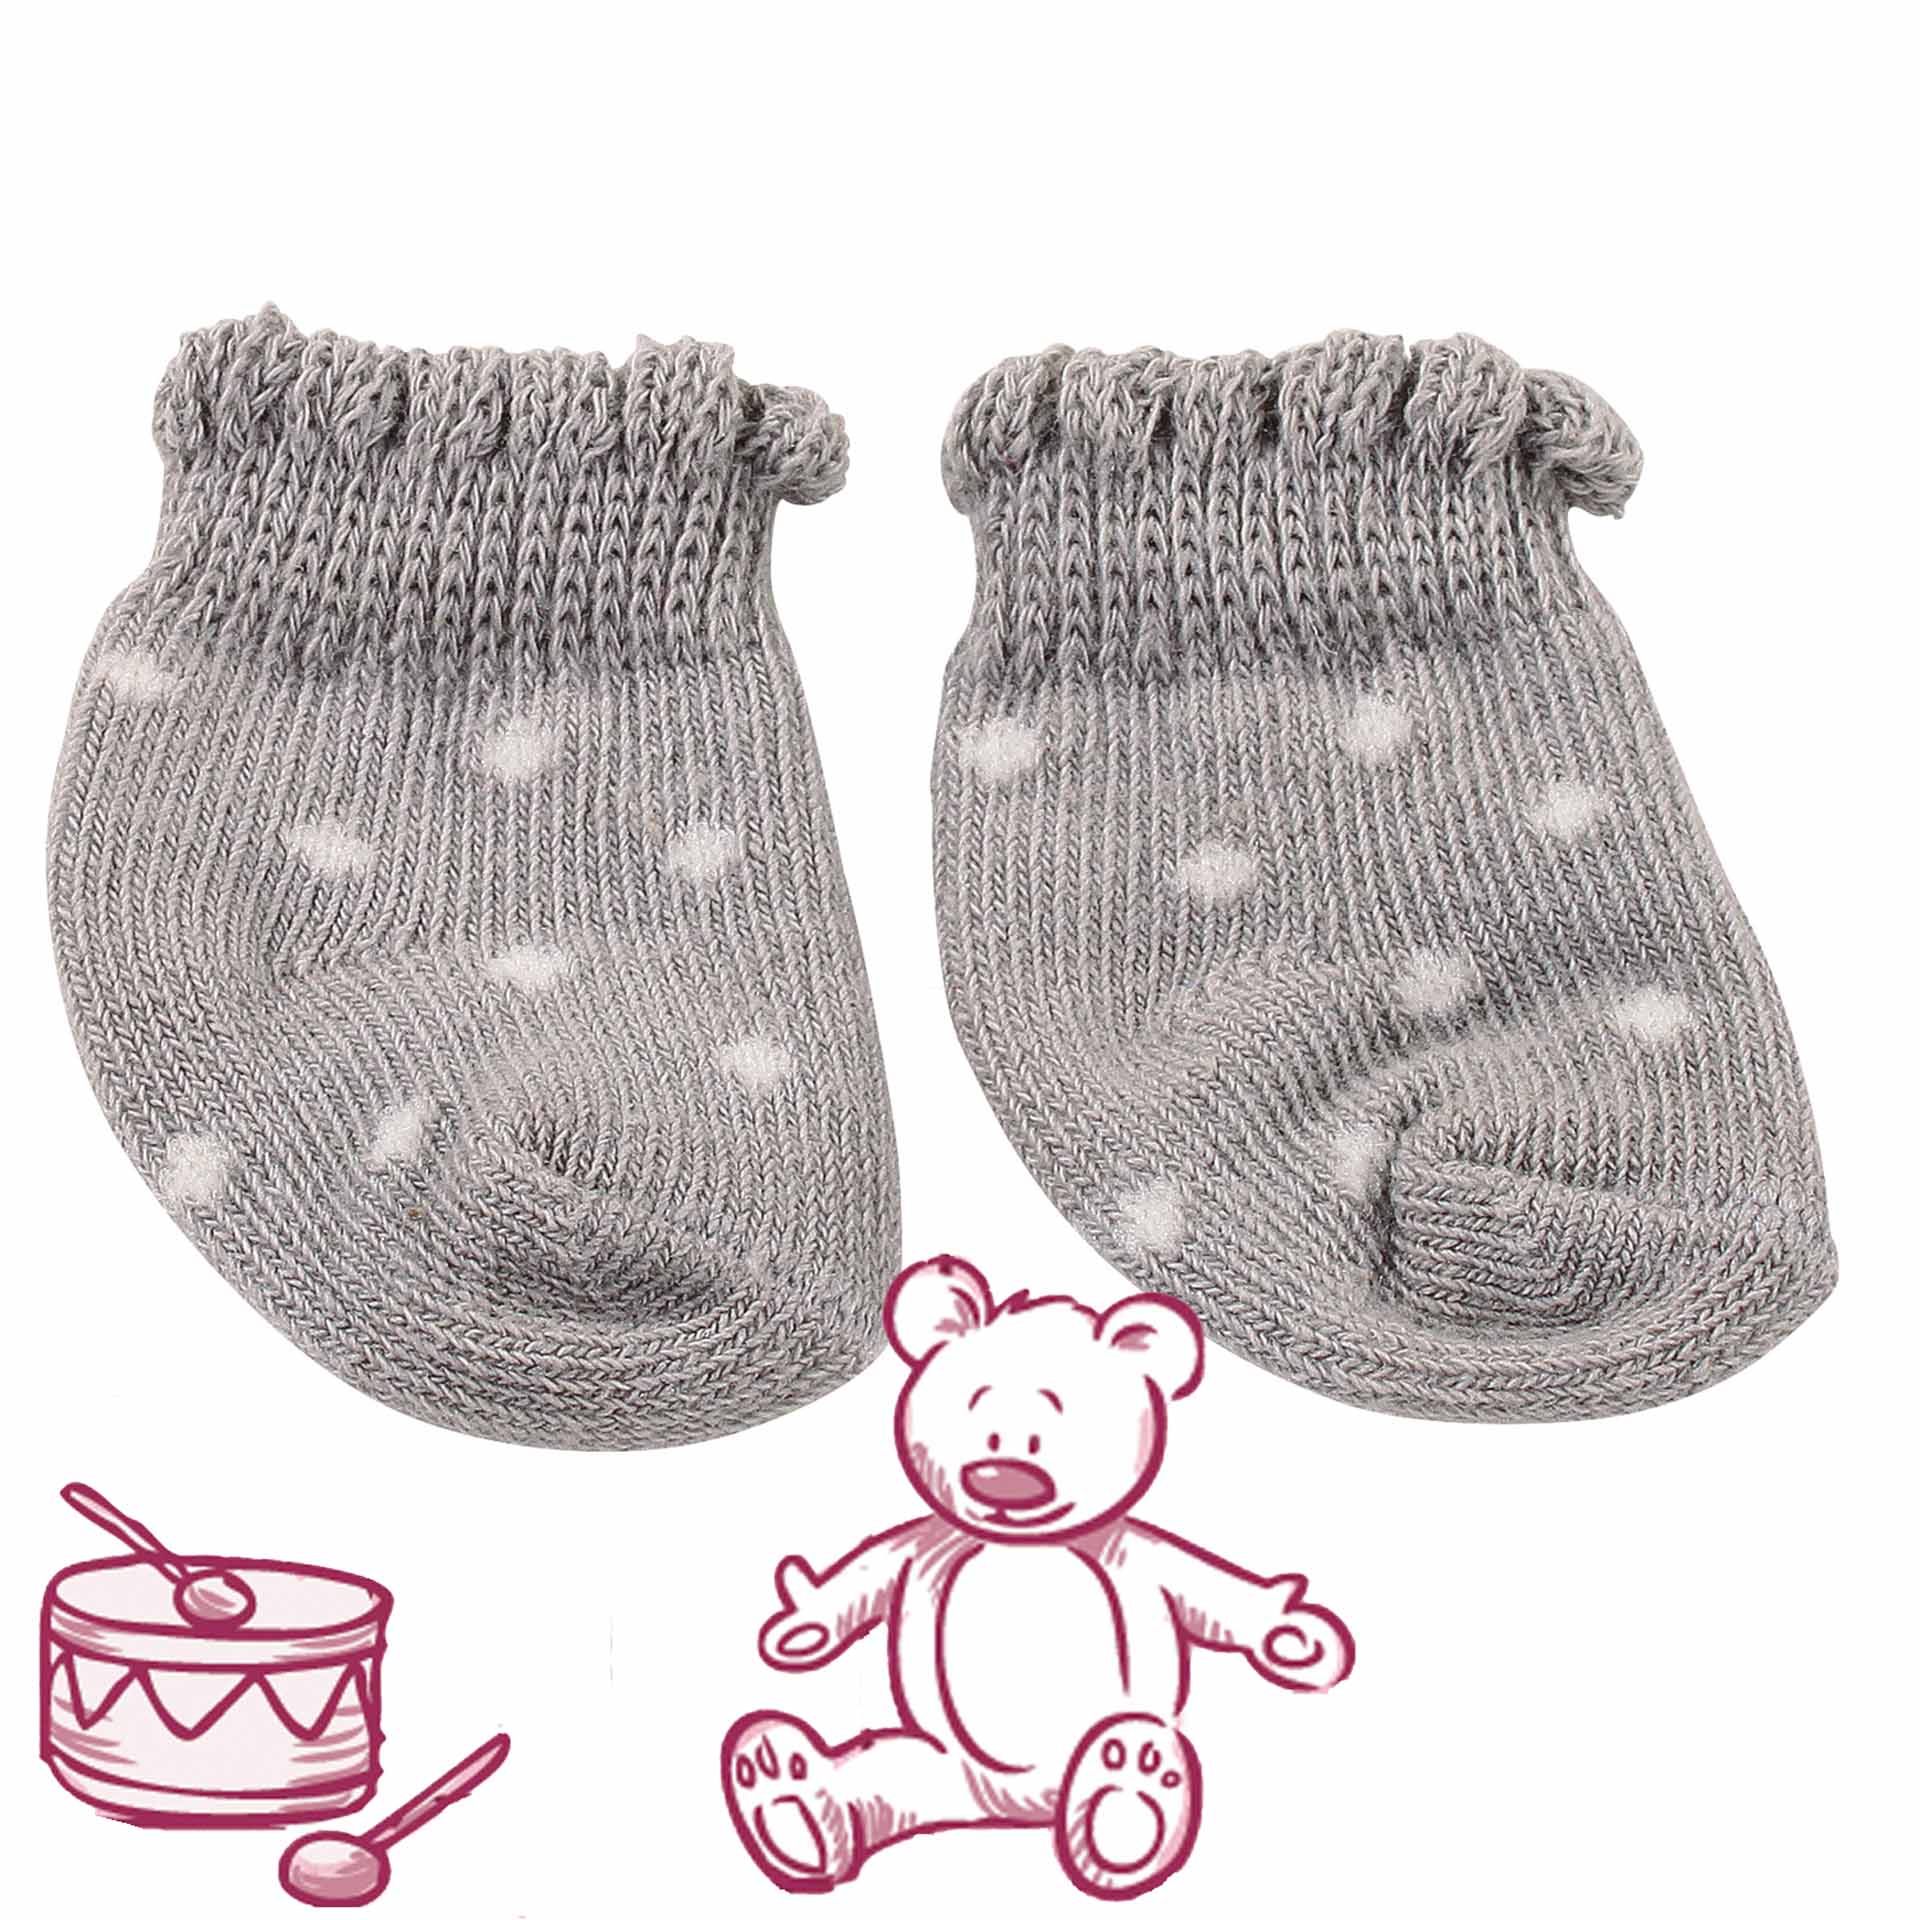 Socks with grey-white spots